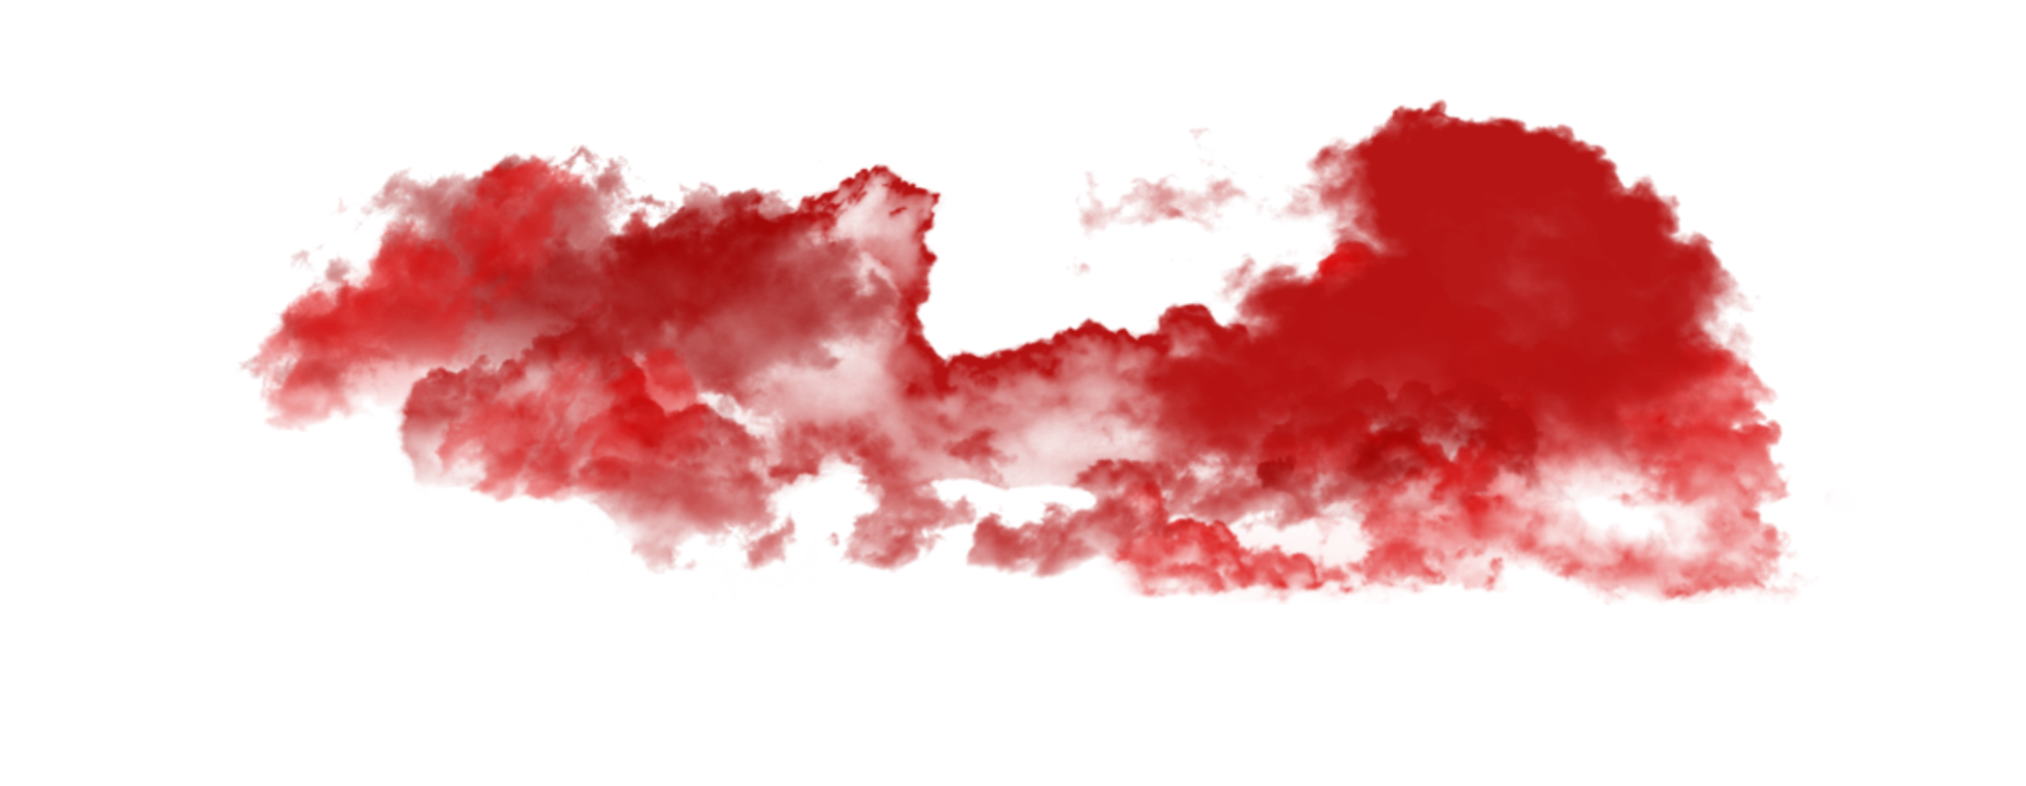 Красный дым PNG Image